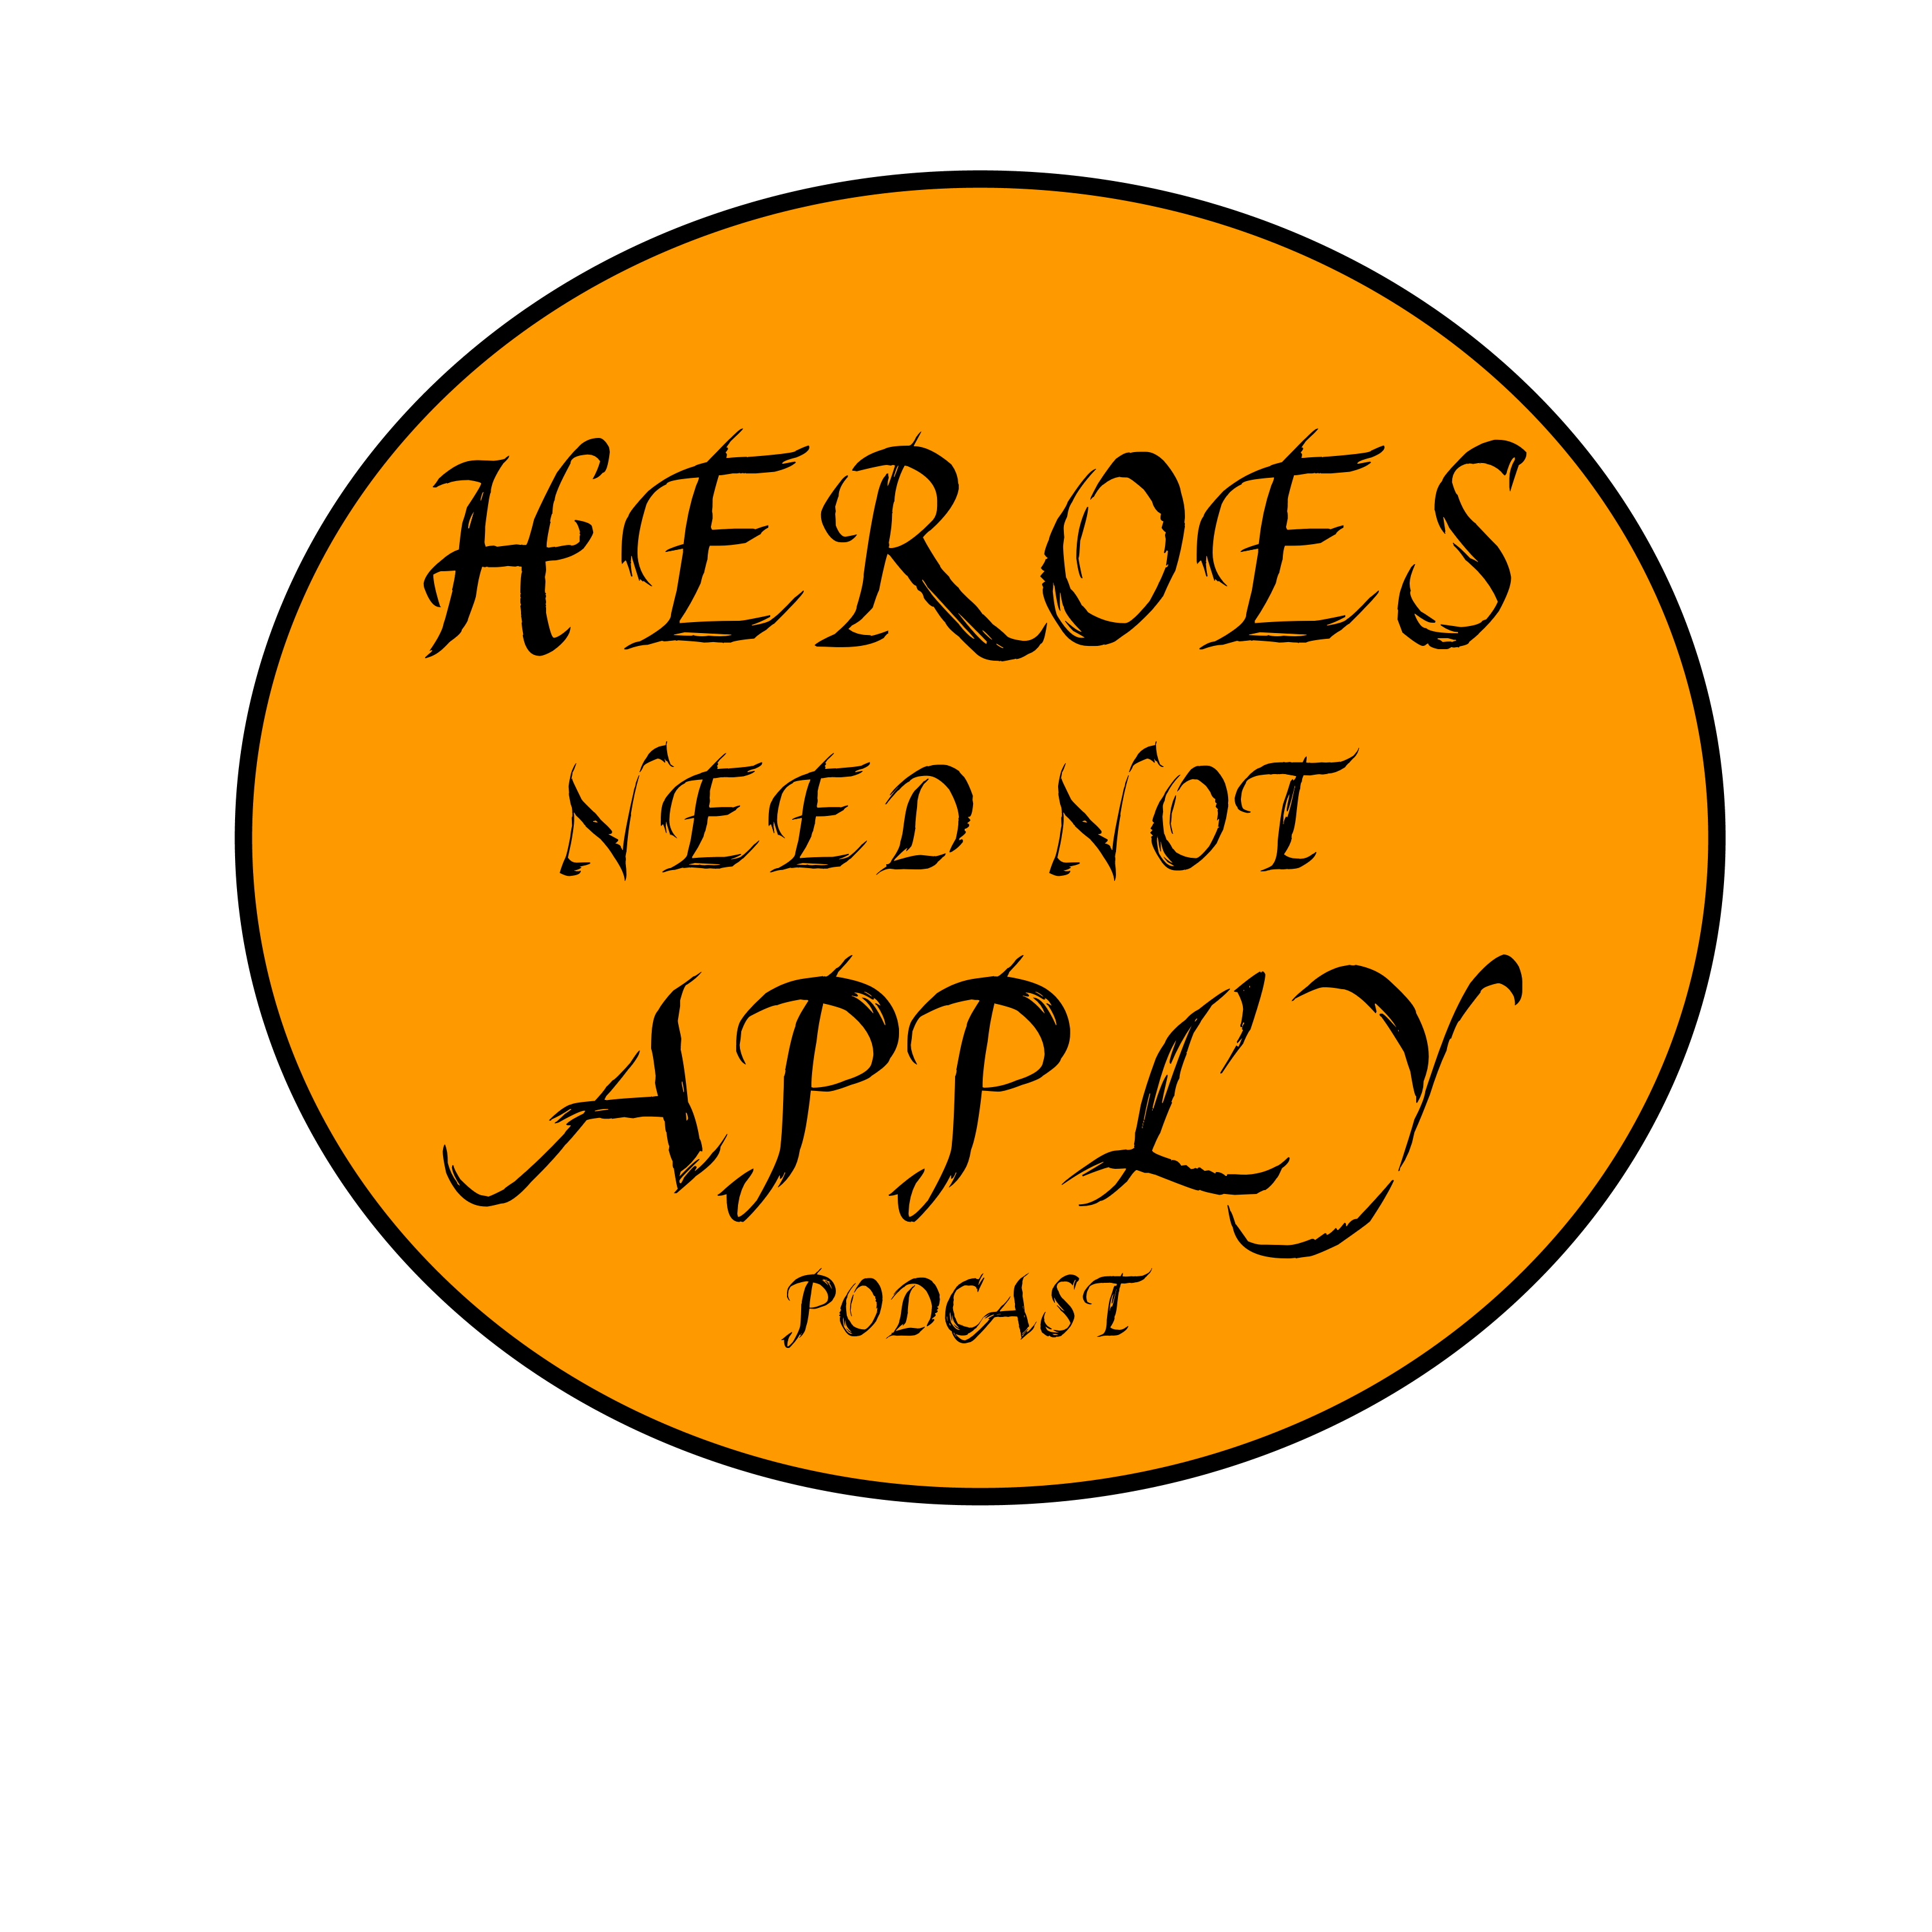 Heroes Need Not Apply